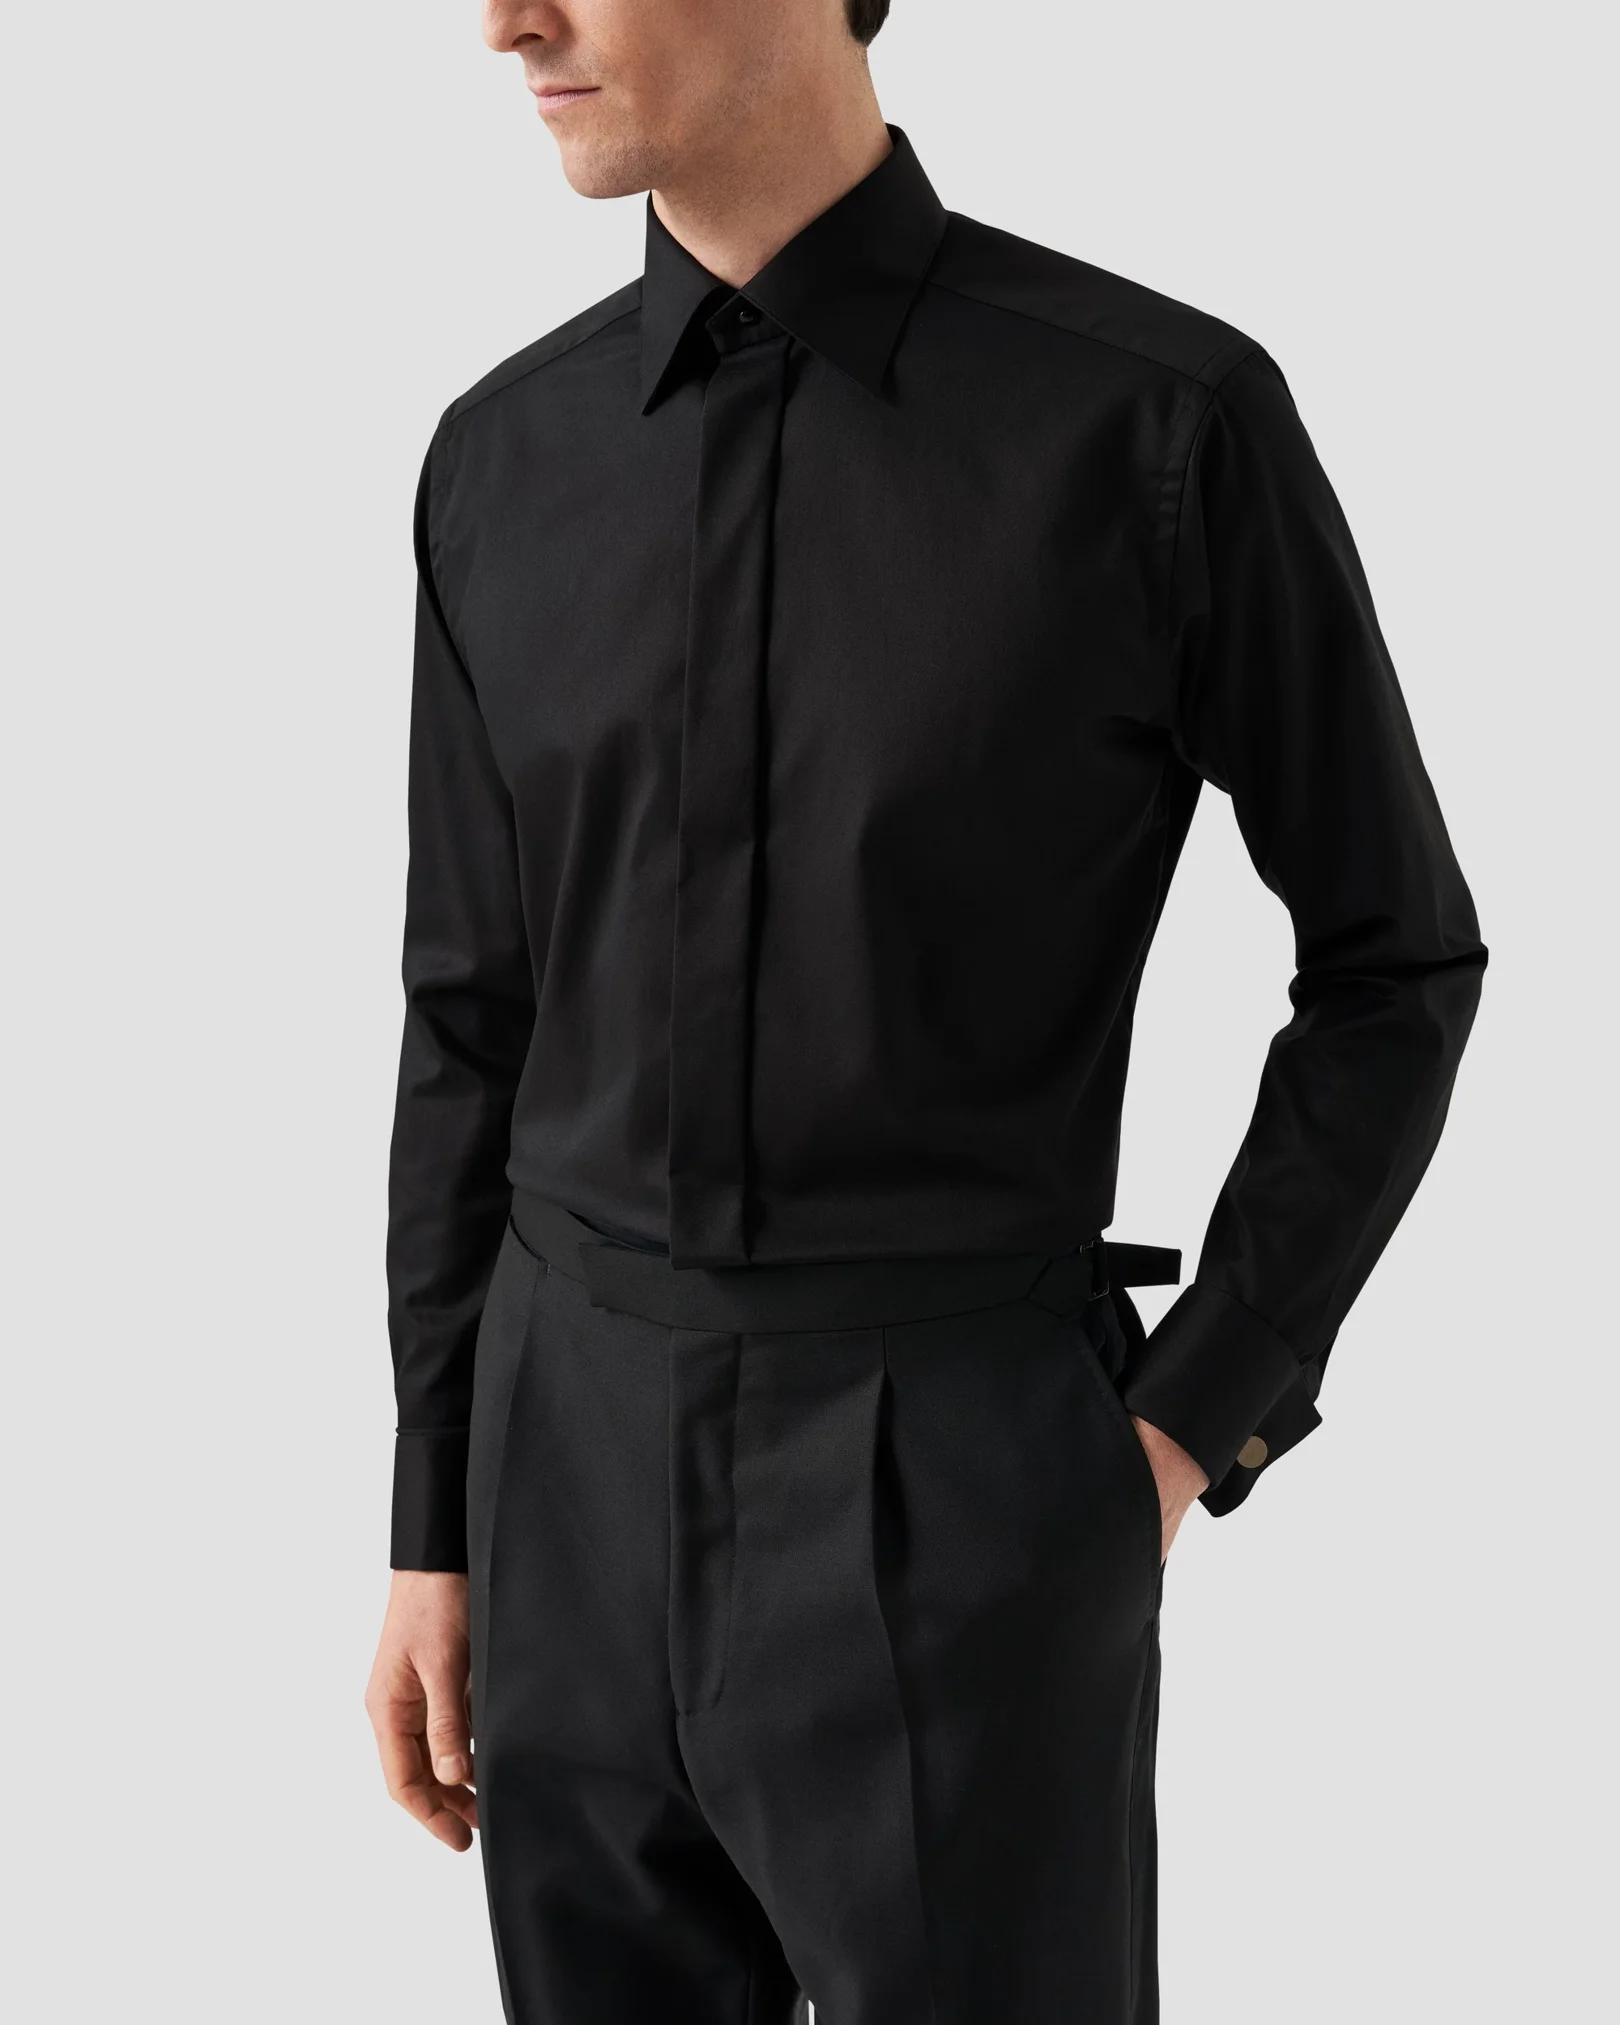 Black Tuxedo | BLACK by Vera Wang Tuxedo | Tuxedo Rental